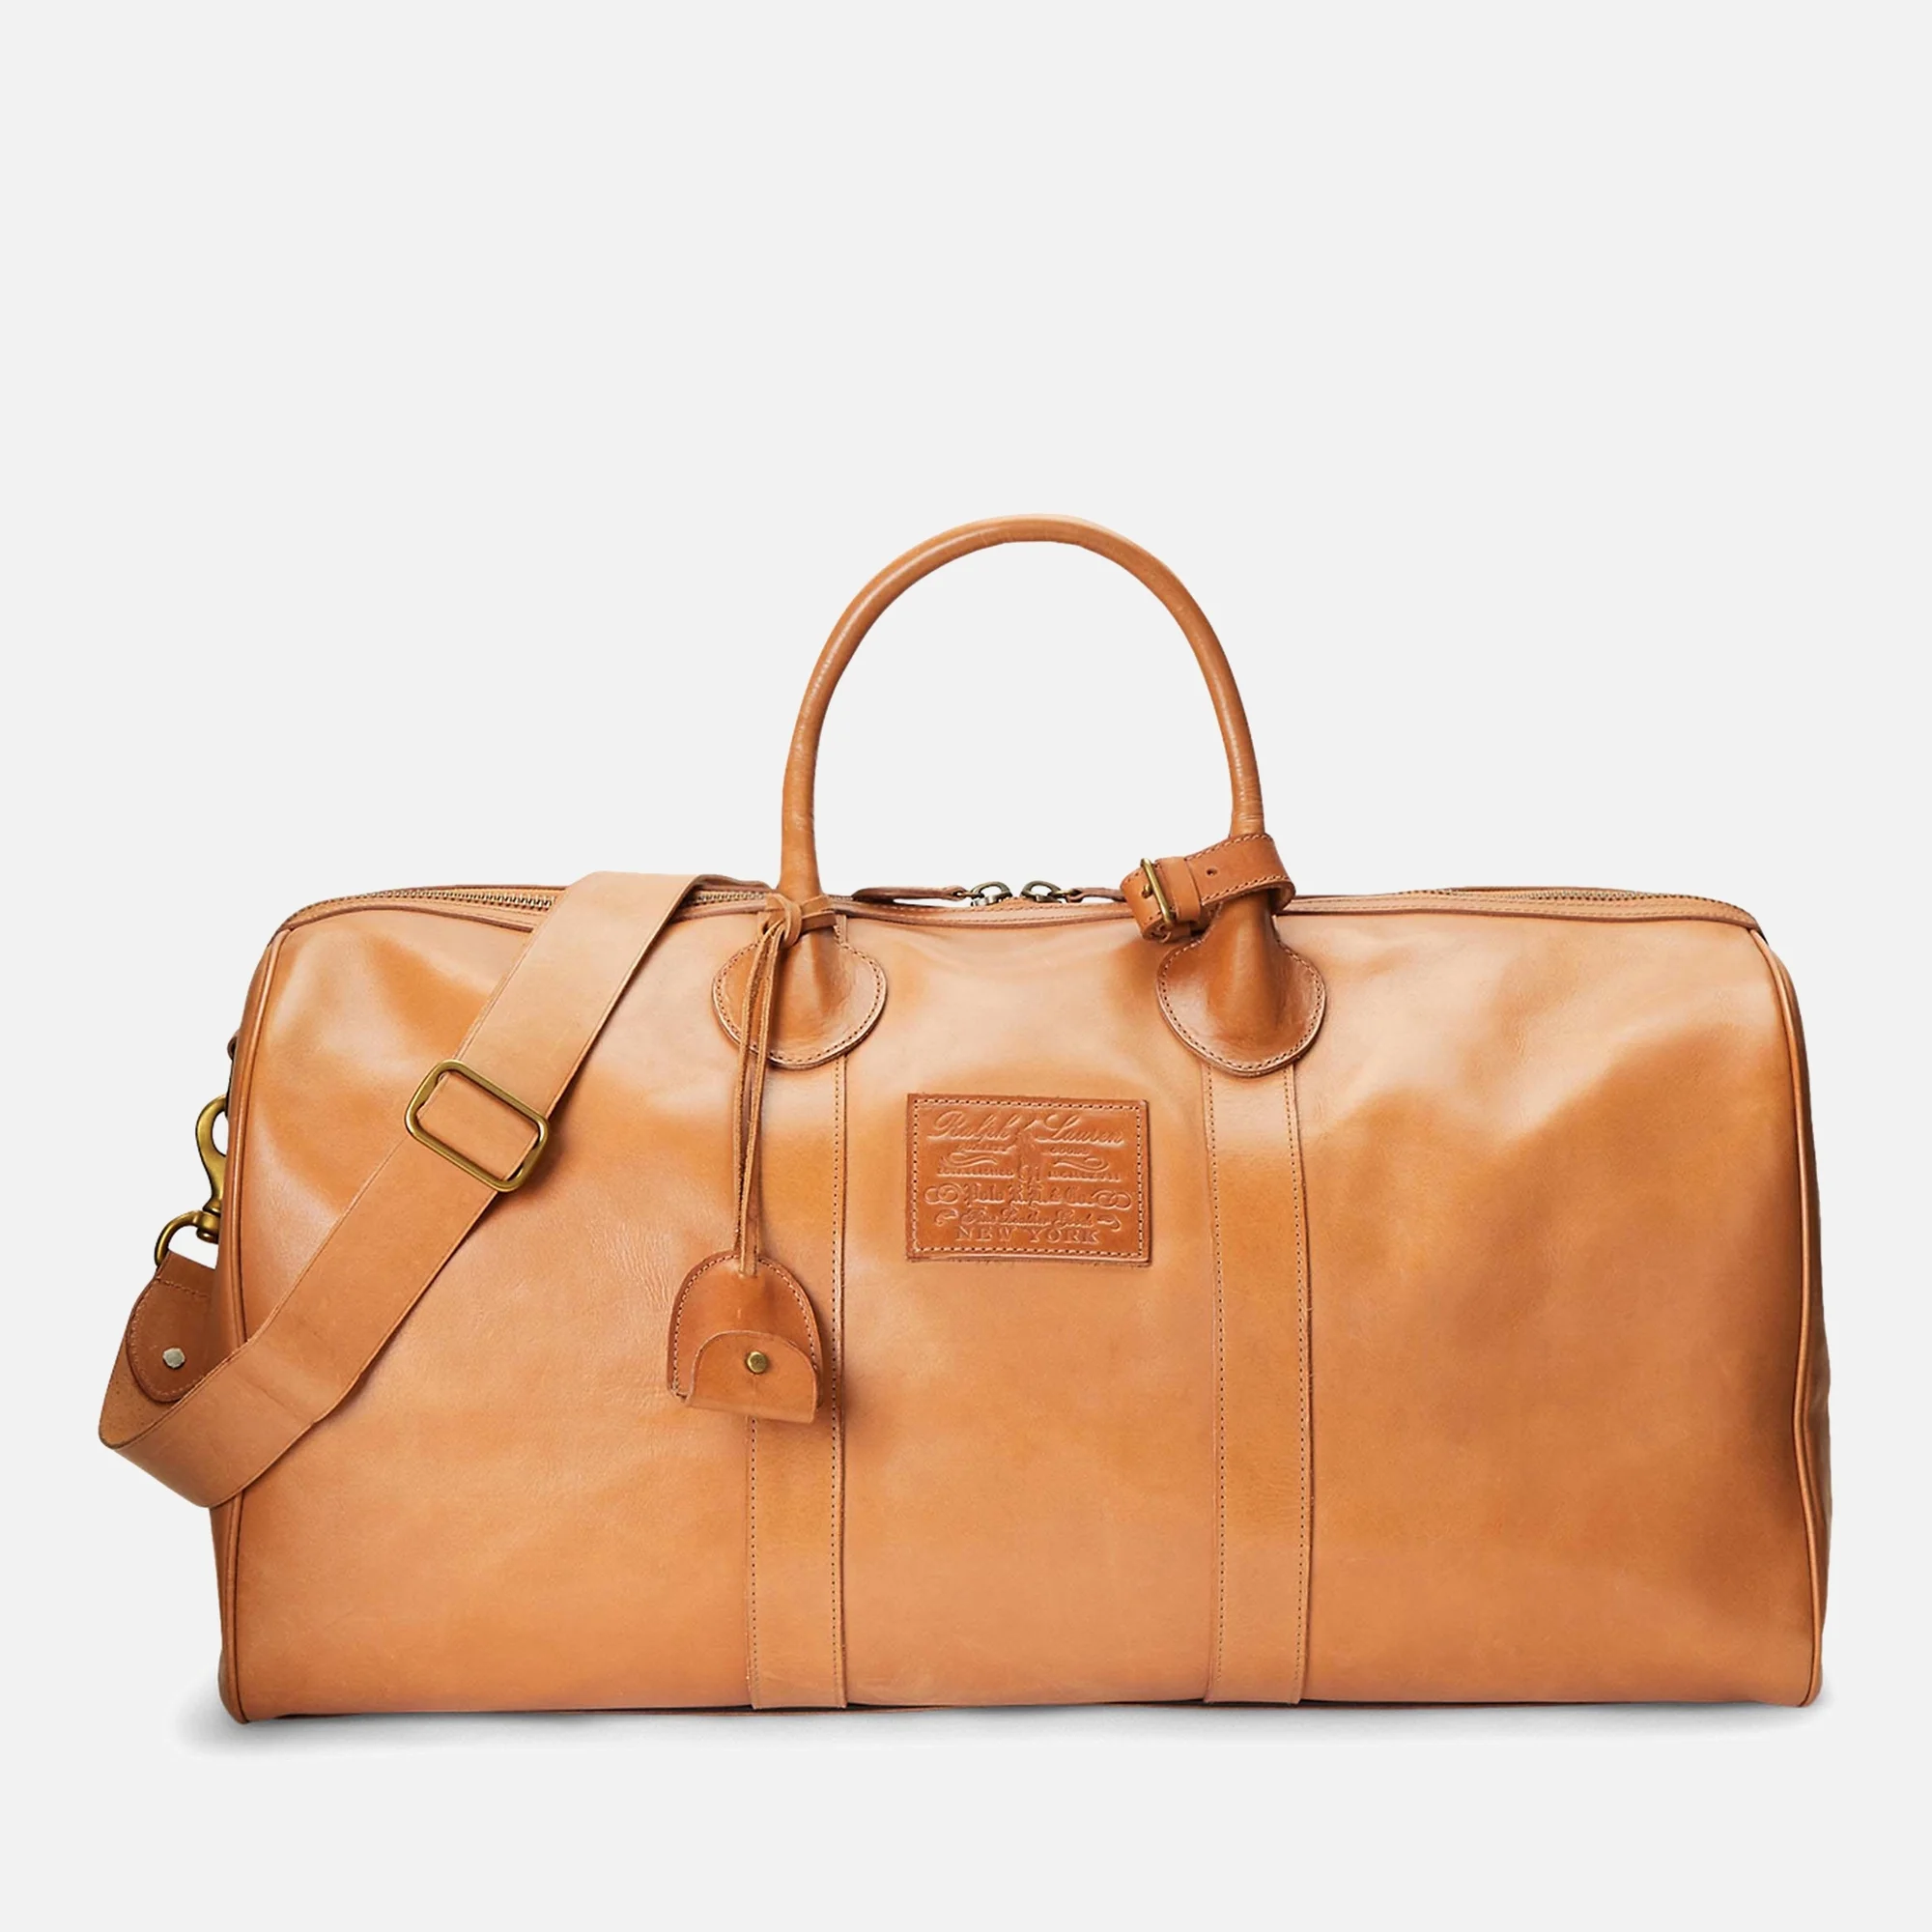 Polo Ralph Lauren Large Heritage Leather Duffle Bag Image 1